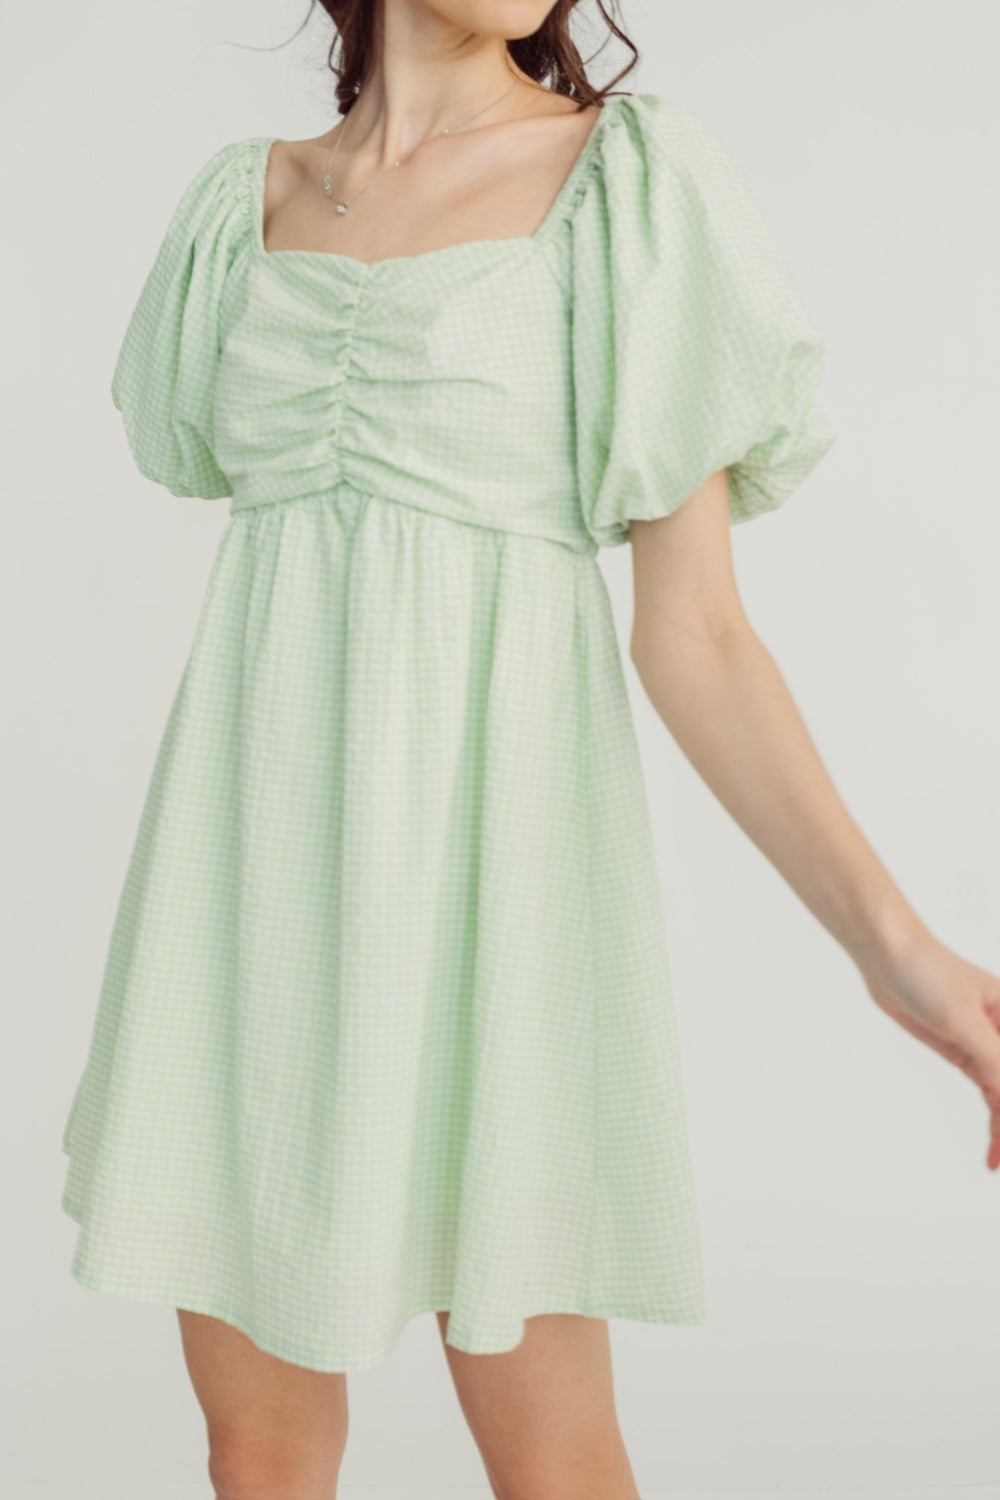 Kyla Baby Doll Checkered Mini Dress - Mossimo PH